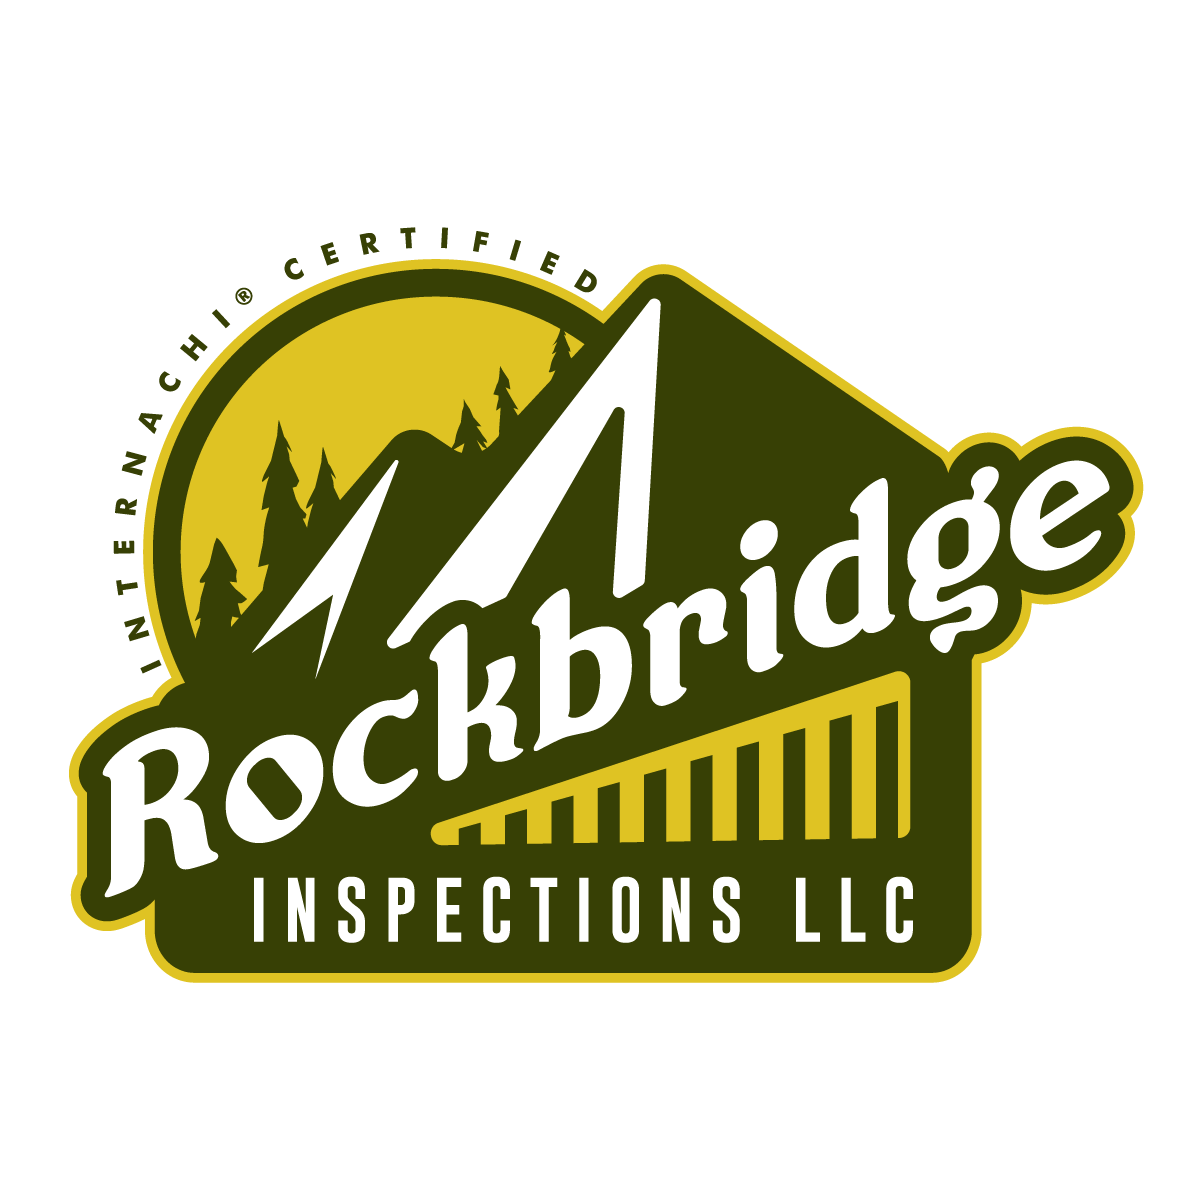 Rockbridge Inspections LLC 230 Tall Wood Trl, Rockbridge Baths Virginia 24473